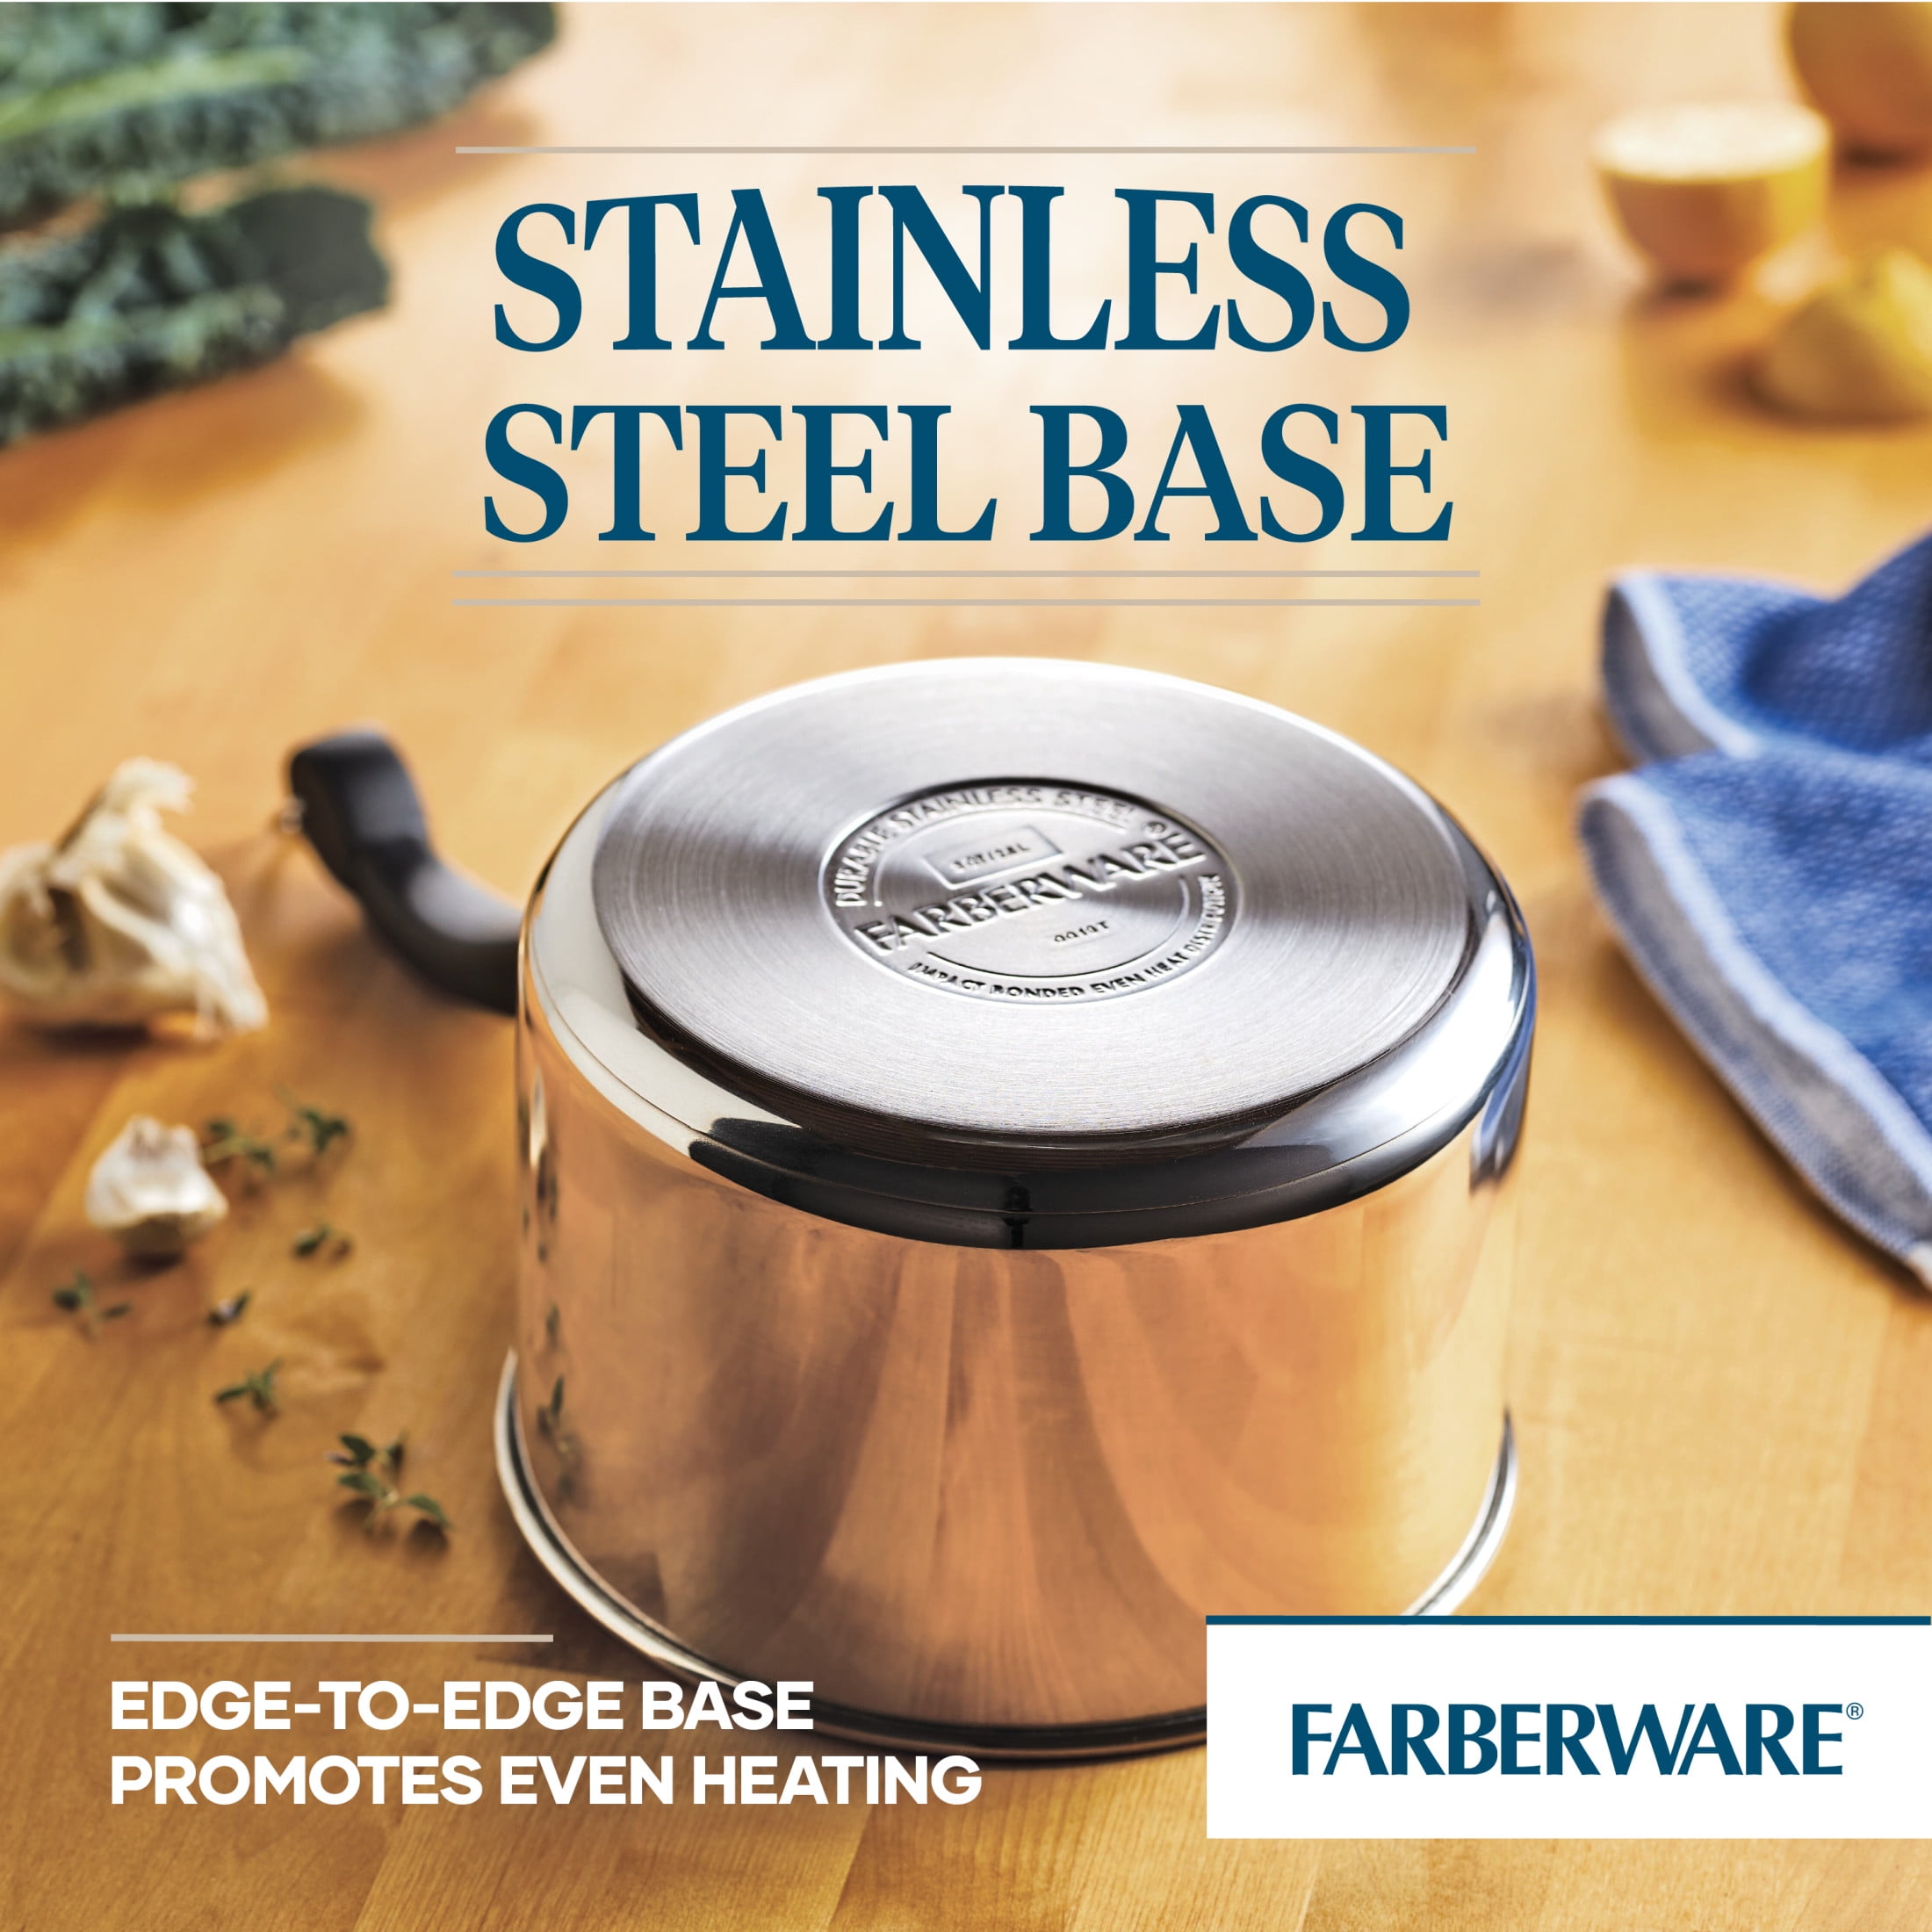 Farberware Classic Stainless Steel 3-Quart Covered Straining Saucepan